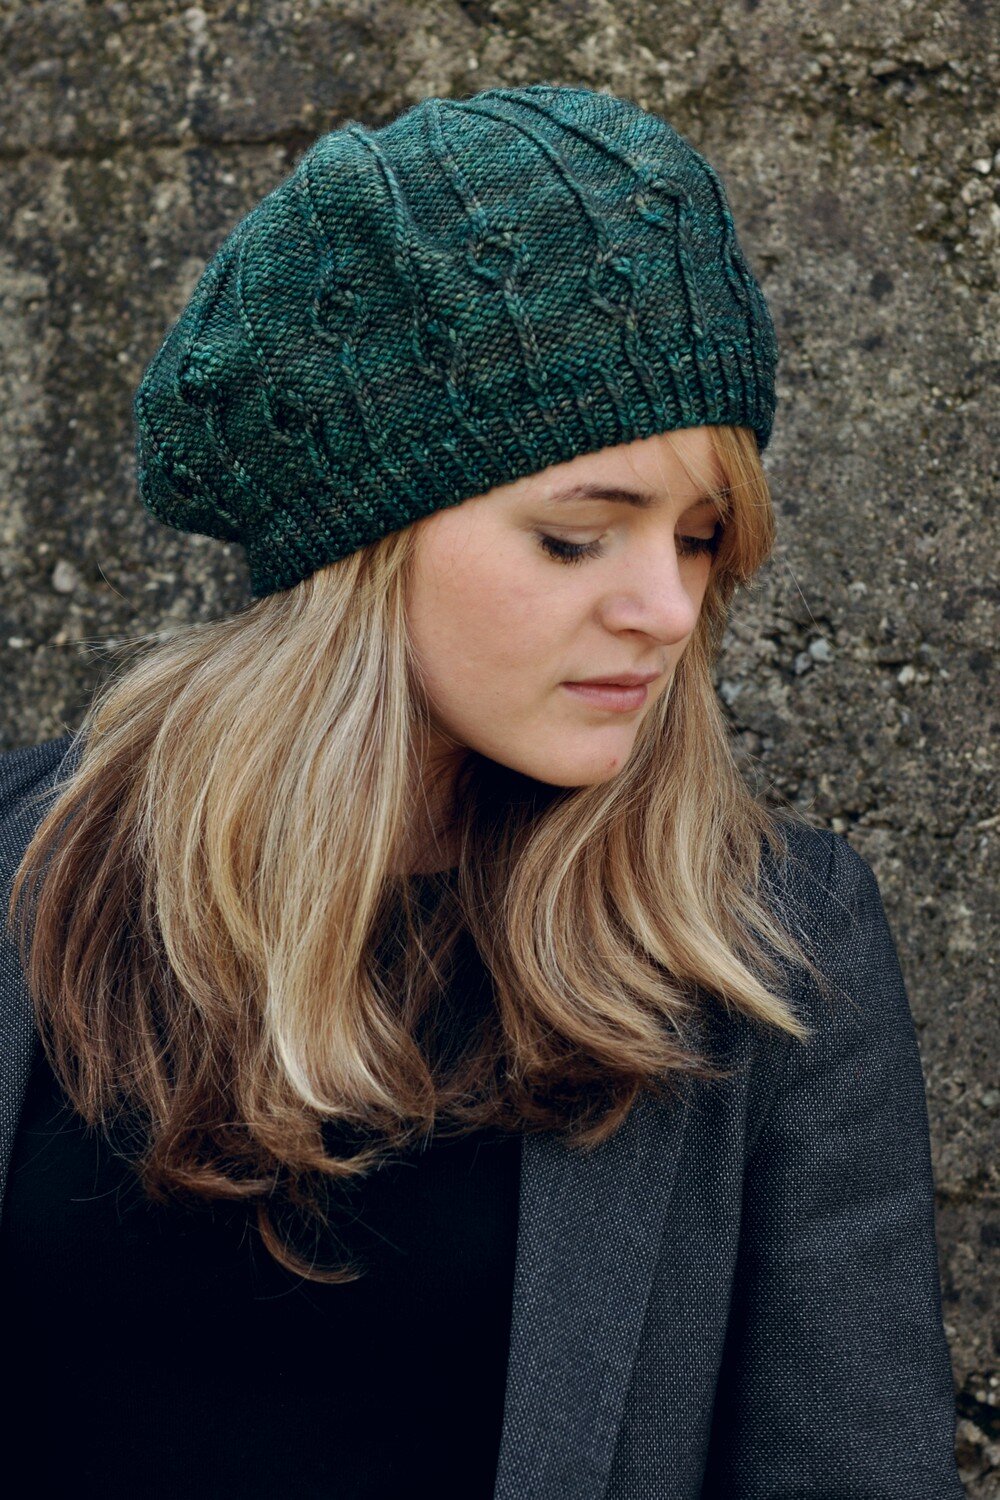 Erica hand knitting beret pattern for DK weight yarn